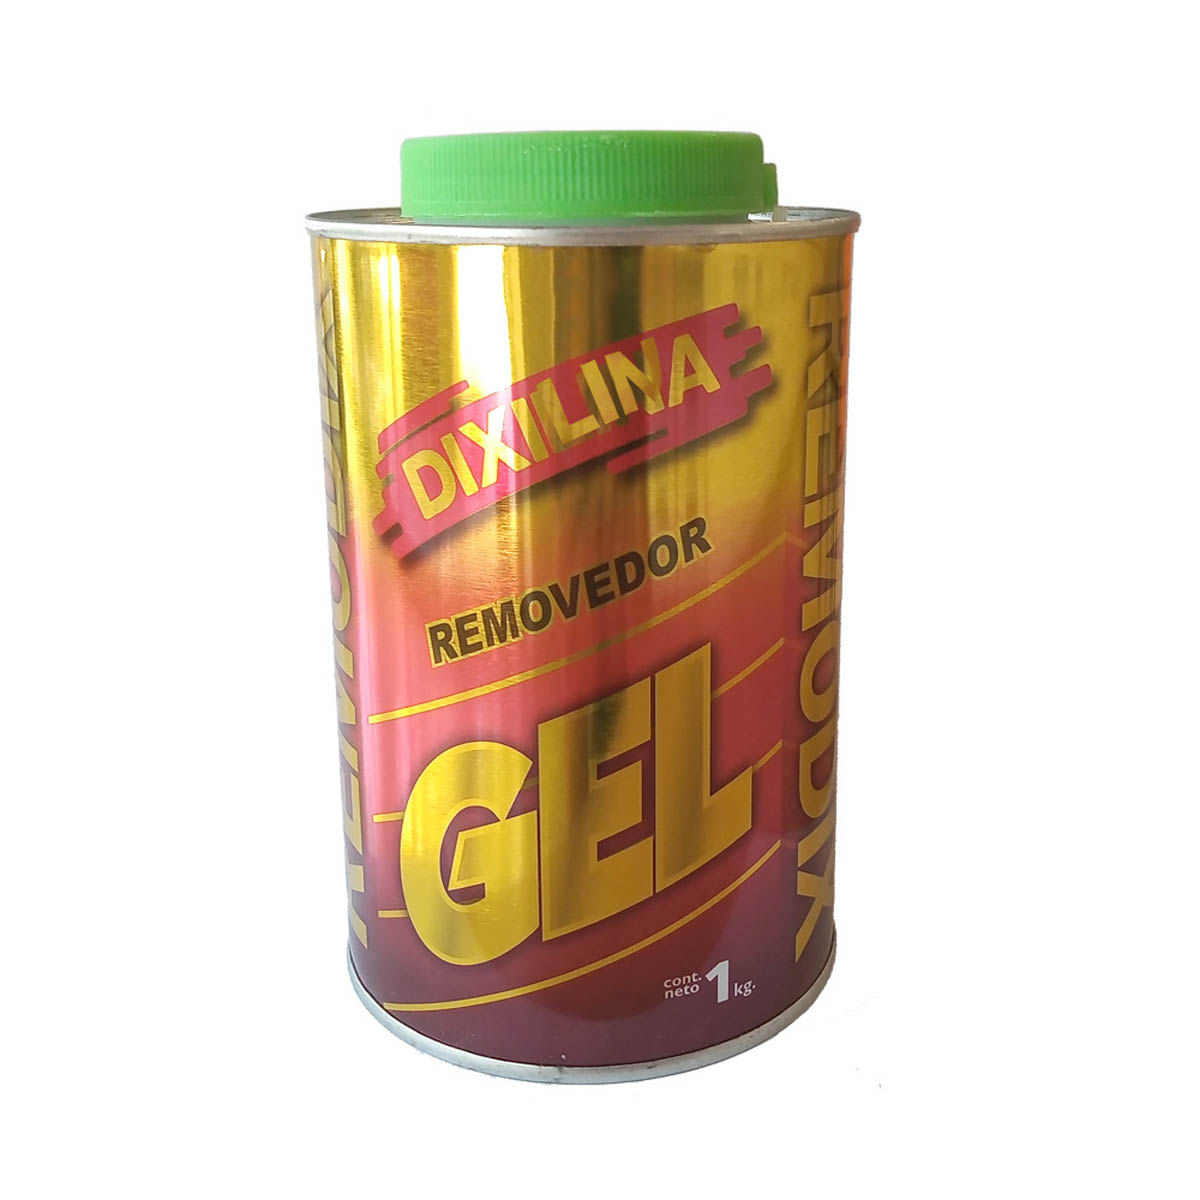 remodix-removedor-gel